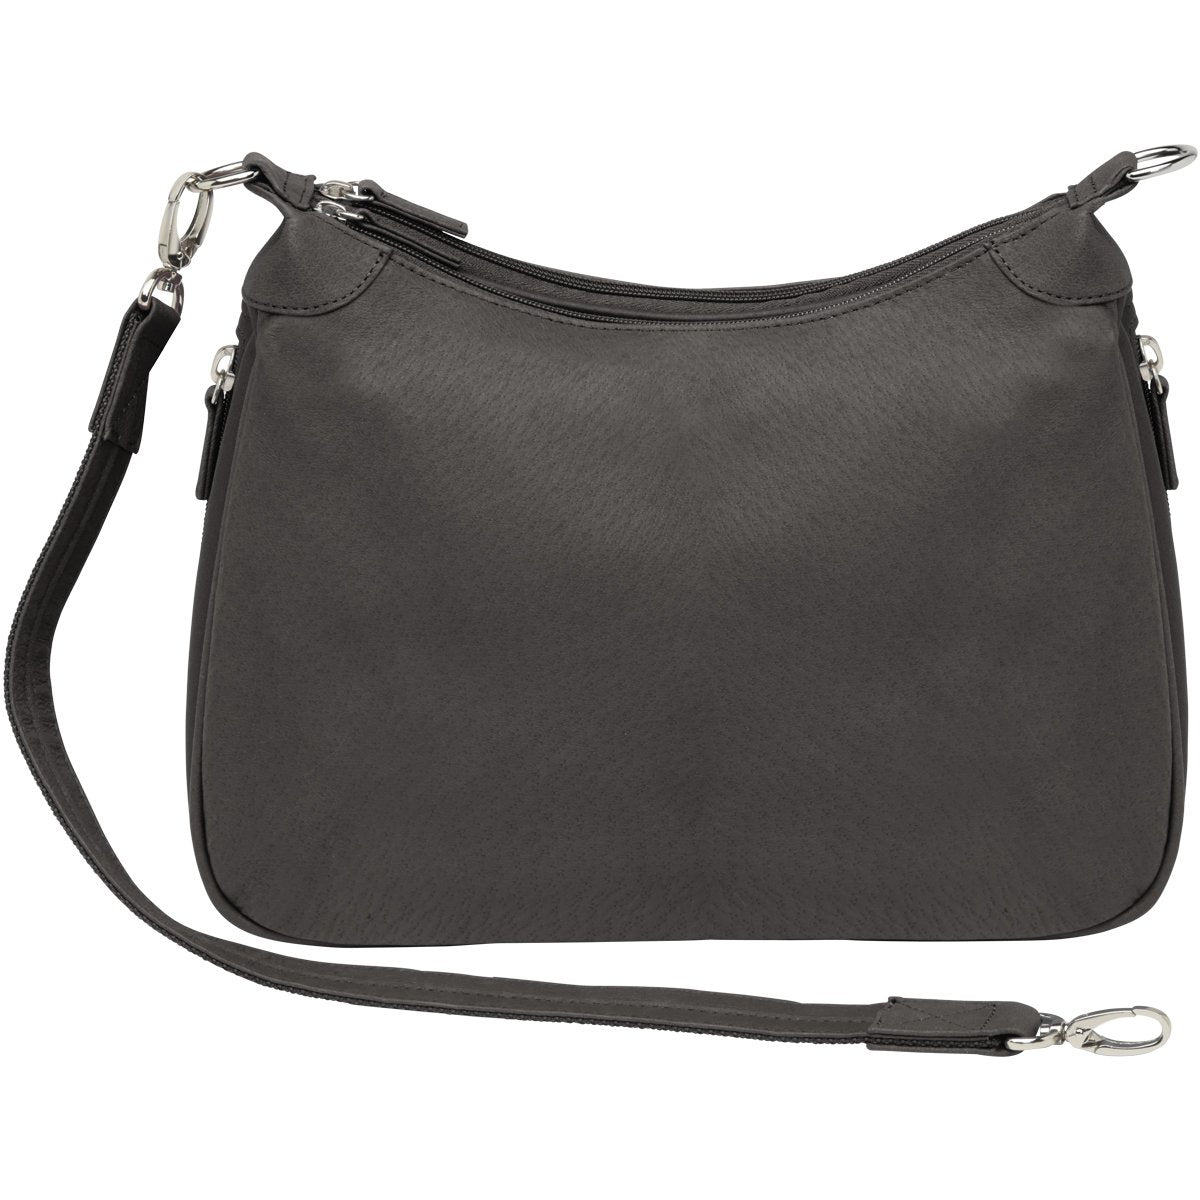 Buy Large Black Hobo Bag With Leather Strap. Linen Hobo Bag for Summer.  Casual Style Shoulder Bag for Everyday. Online in India - Etsy